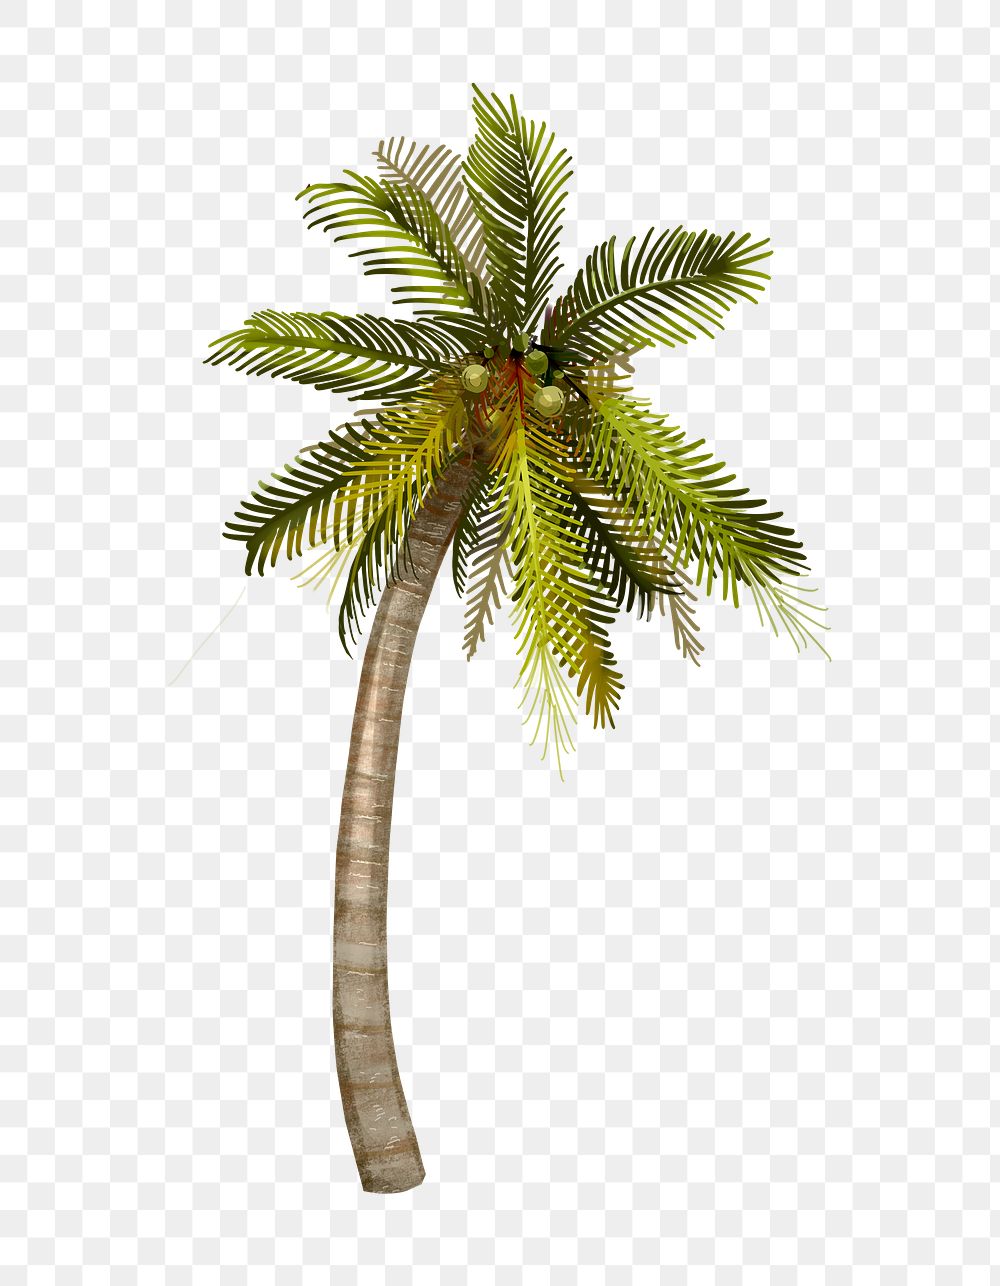 Tropical coconut tree png illustration sticker, transparent background